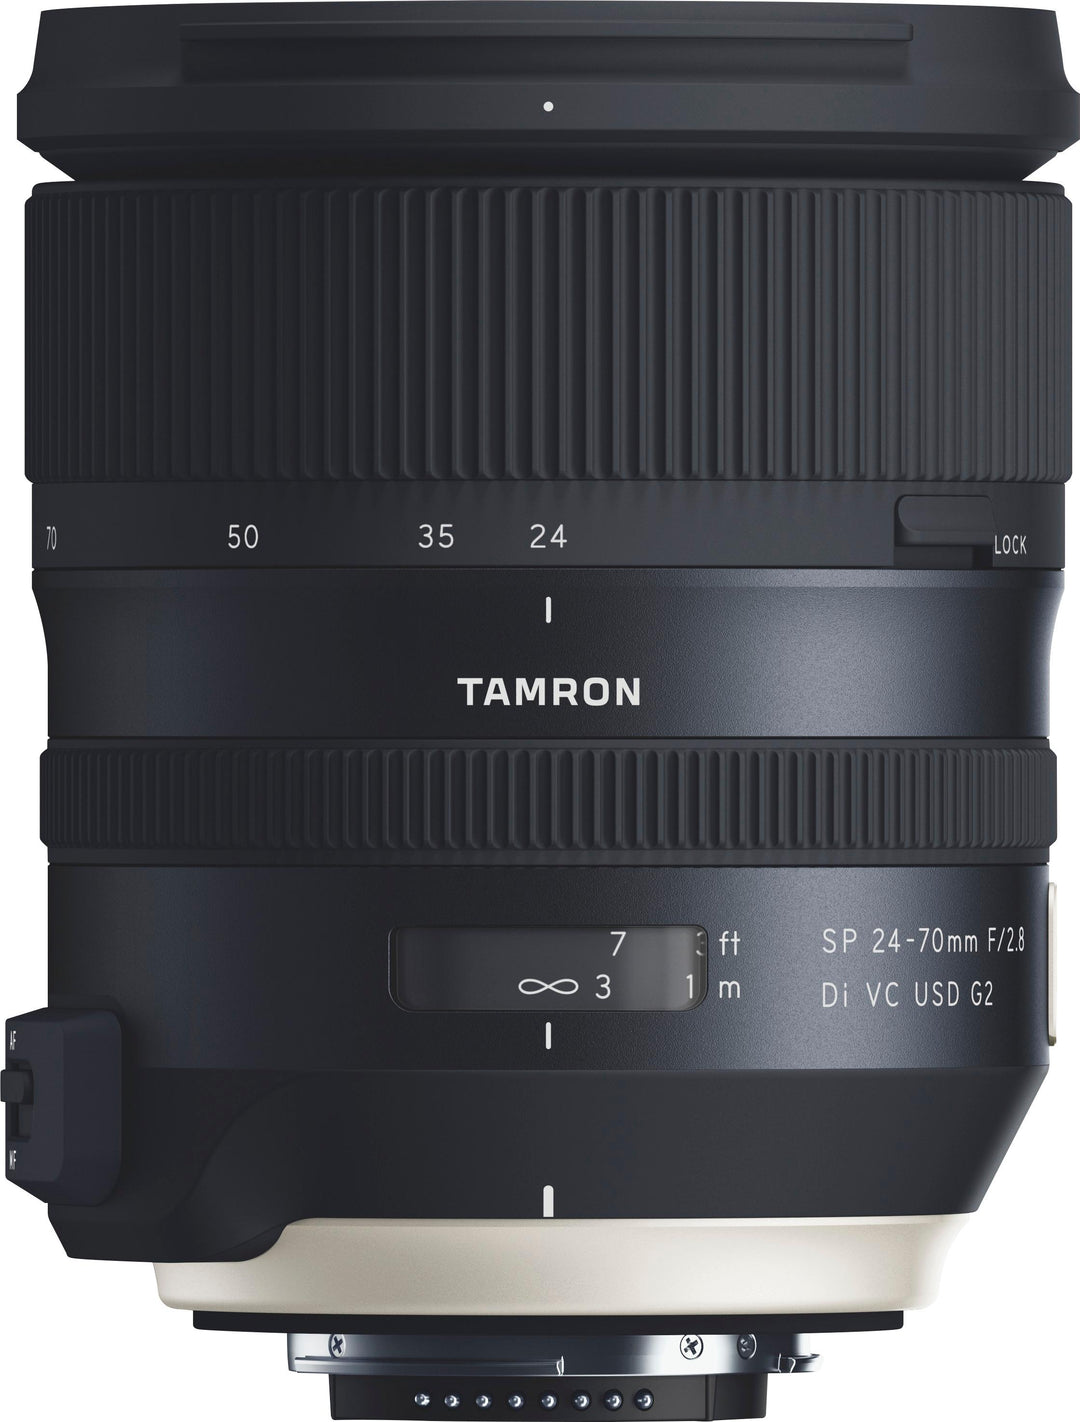 Tamron - SP 24-70mm F/2.8 Di VC USD G2 Zoom Lens for Nikon DSLR cameras - black_0